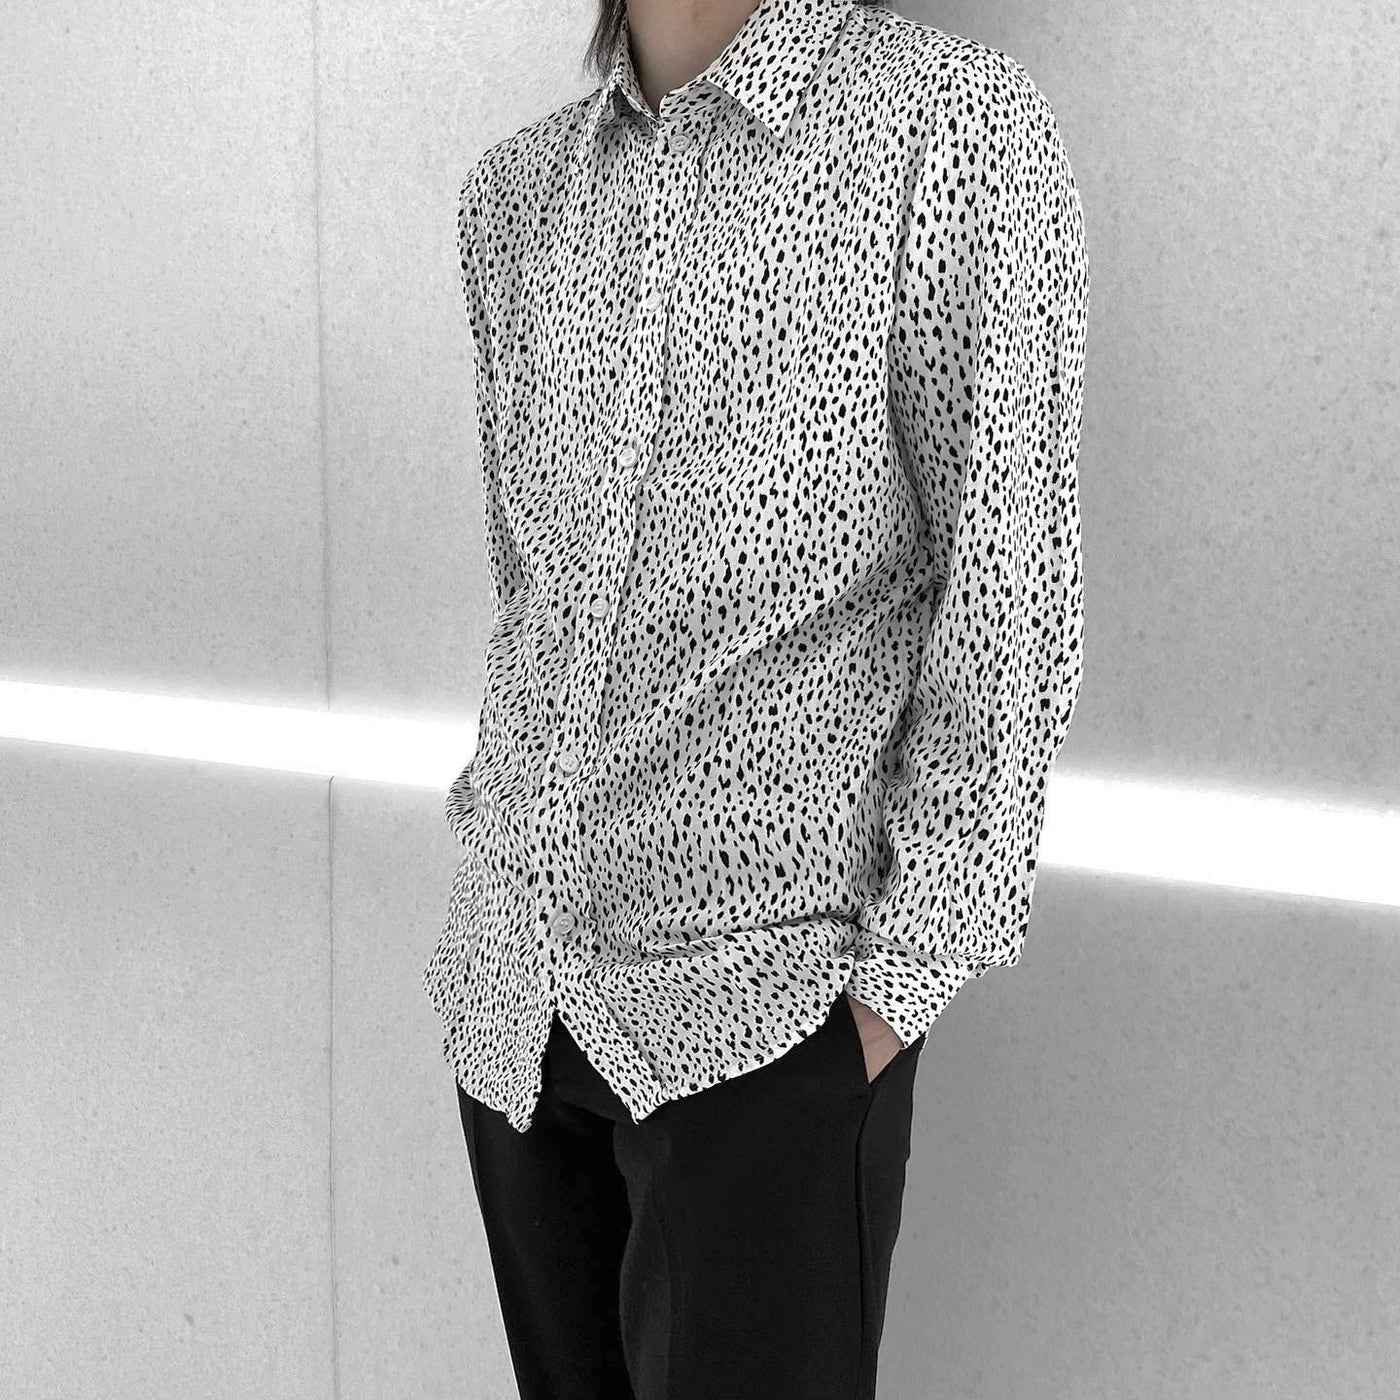 [Instant delivery]"Leopard Viscose shirt"Leopard viscose shirt (white)